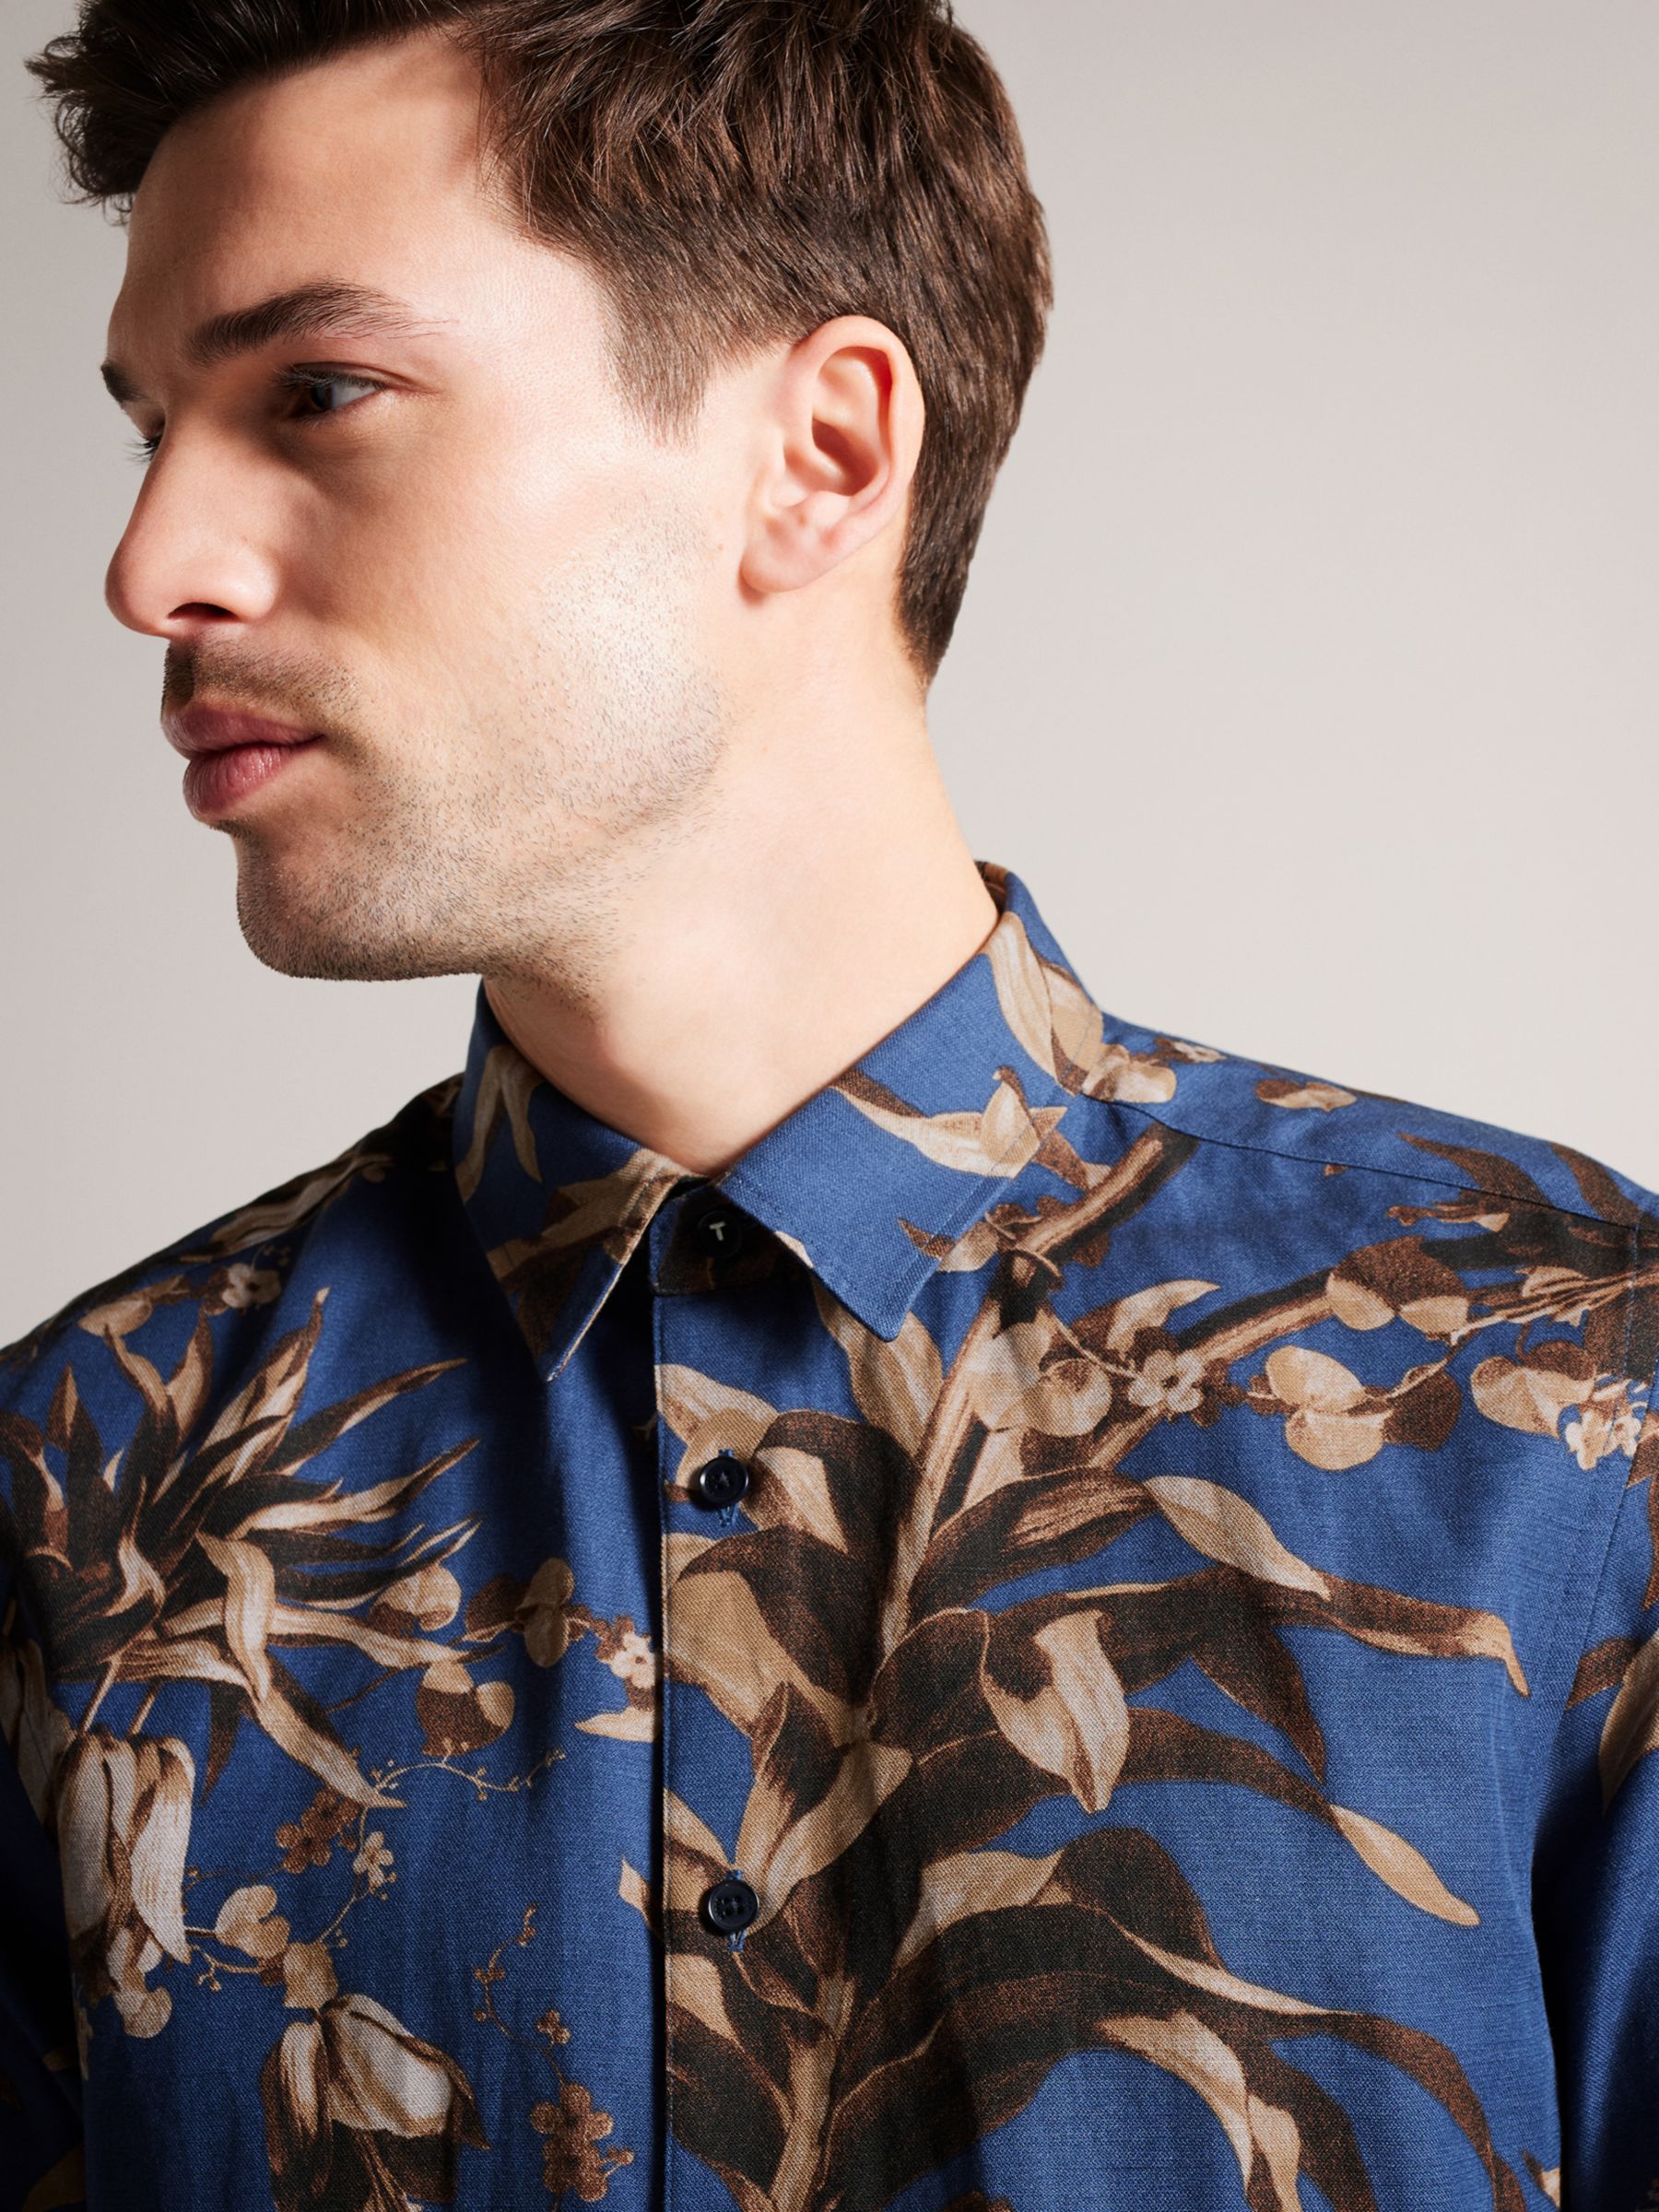 Buy Ted Baker Belmar Short Sleeve Floral Shirt, Navy/Multi Online at johnlewis.com